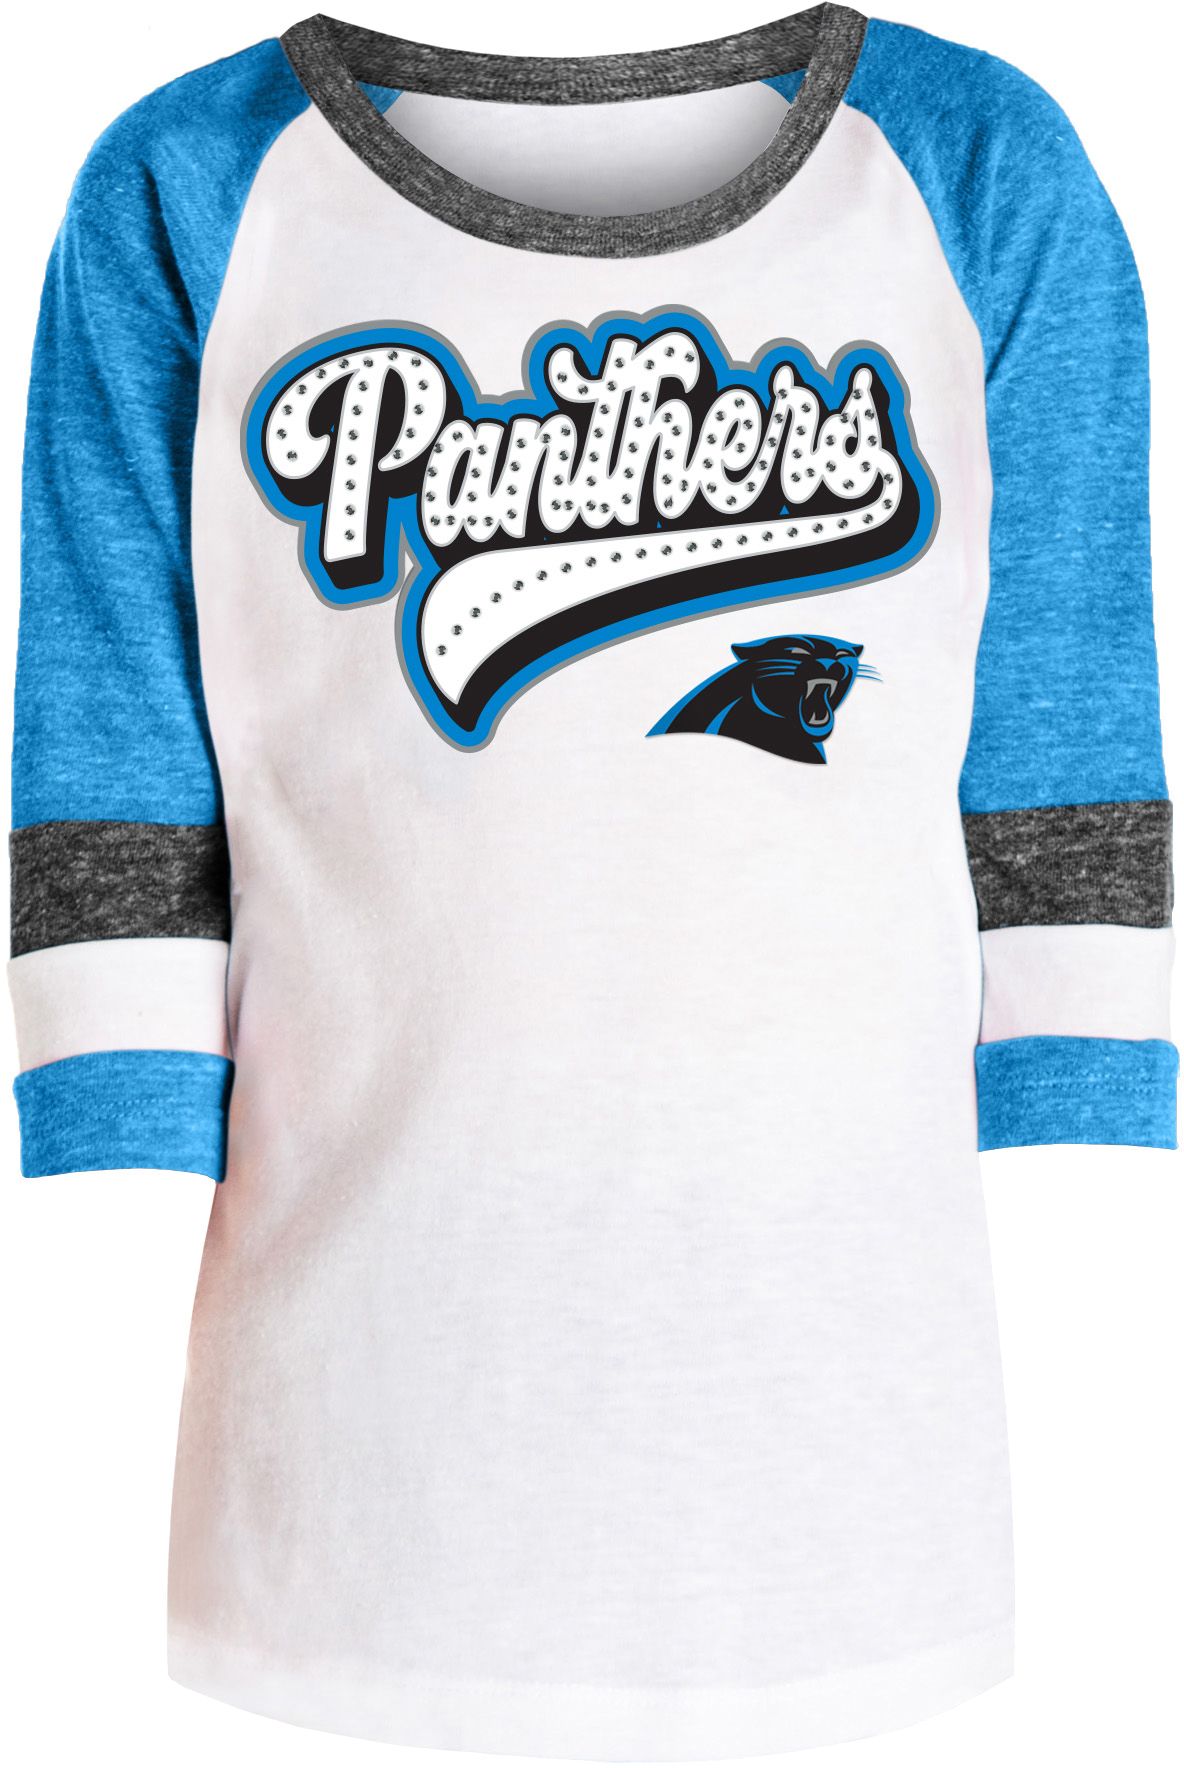 carolina panthers jersey for girls